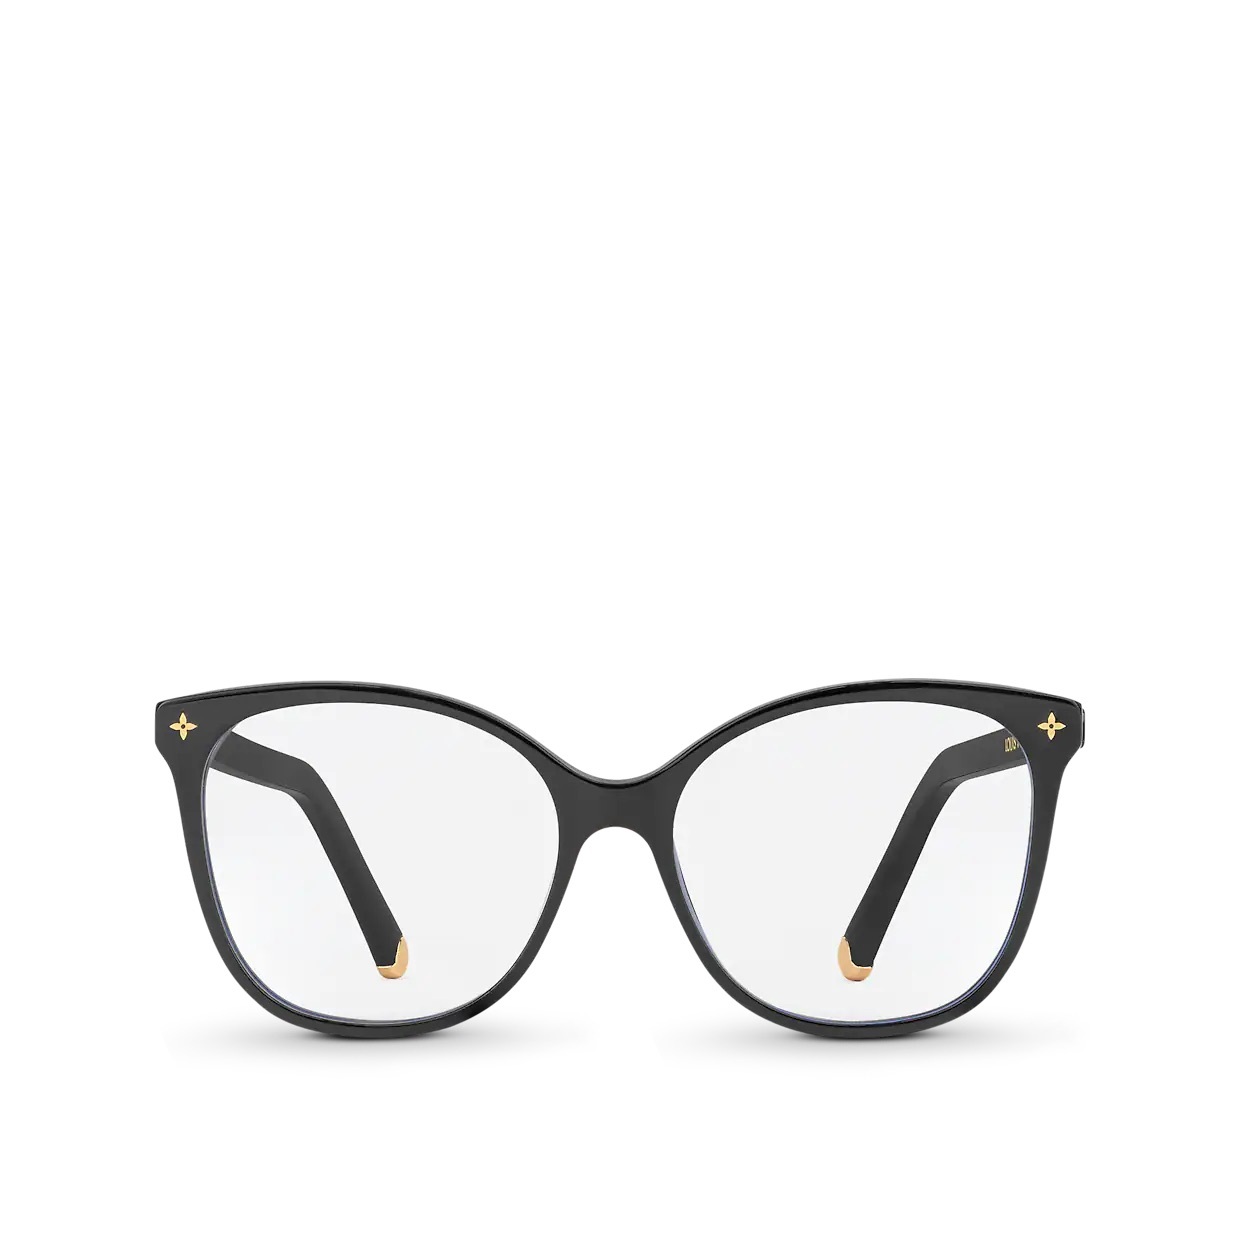 Louis Vuitton My Monogram light cat eye glasses